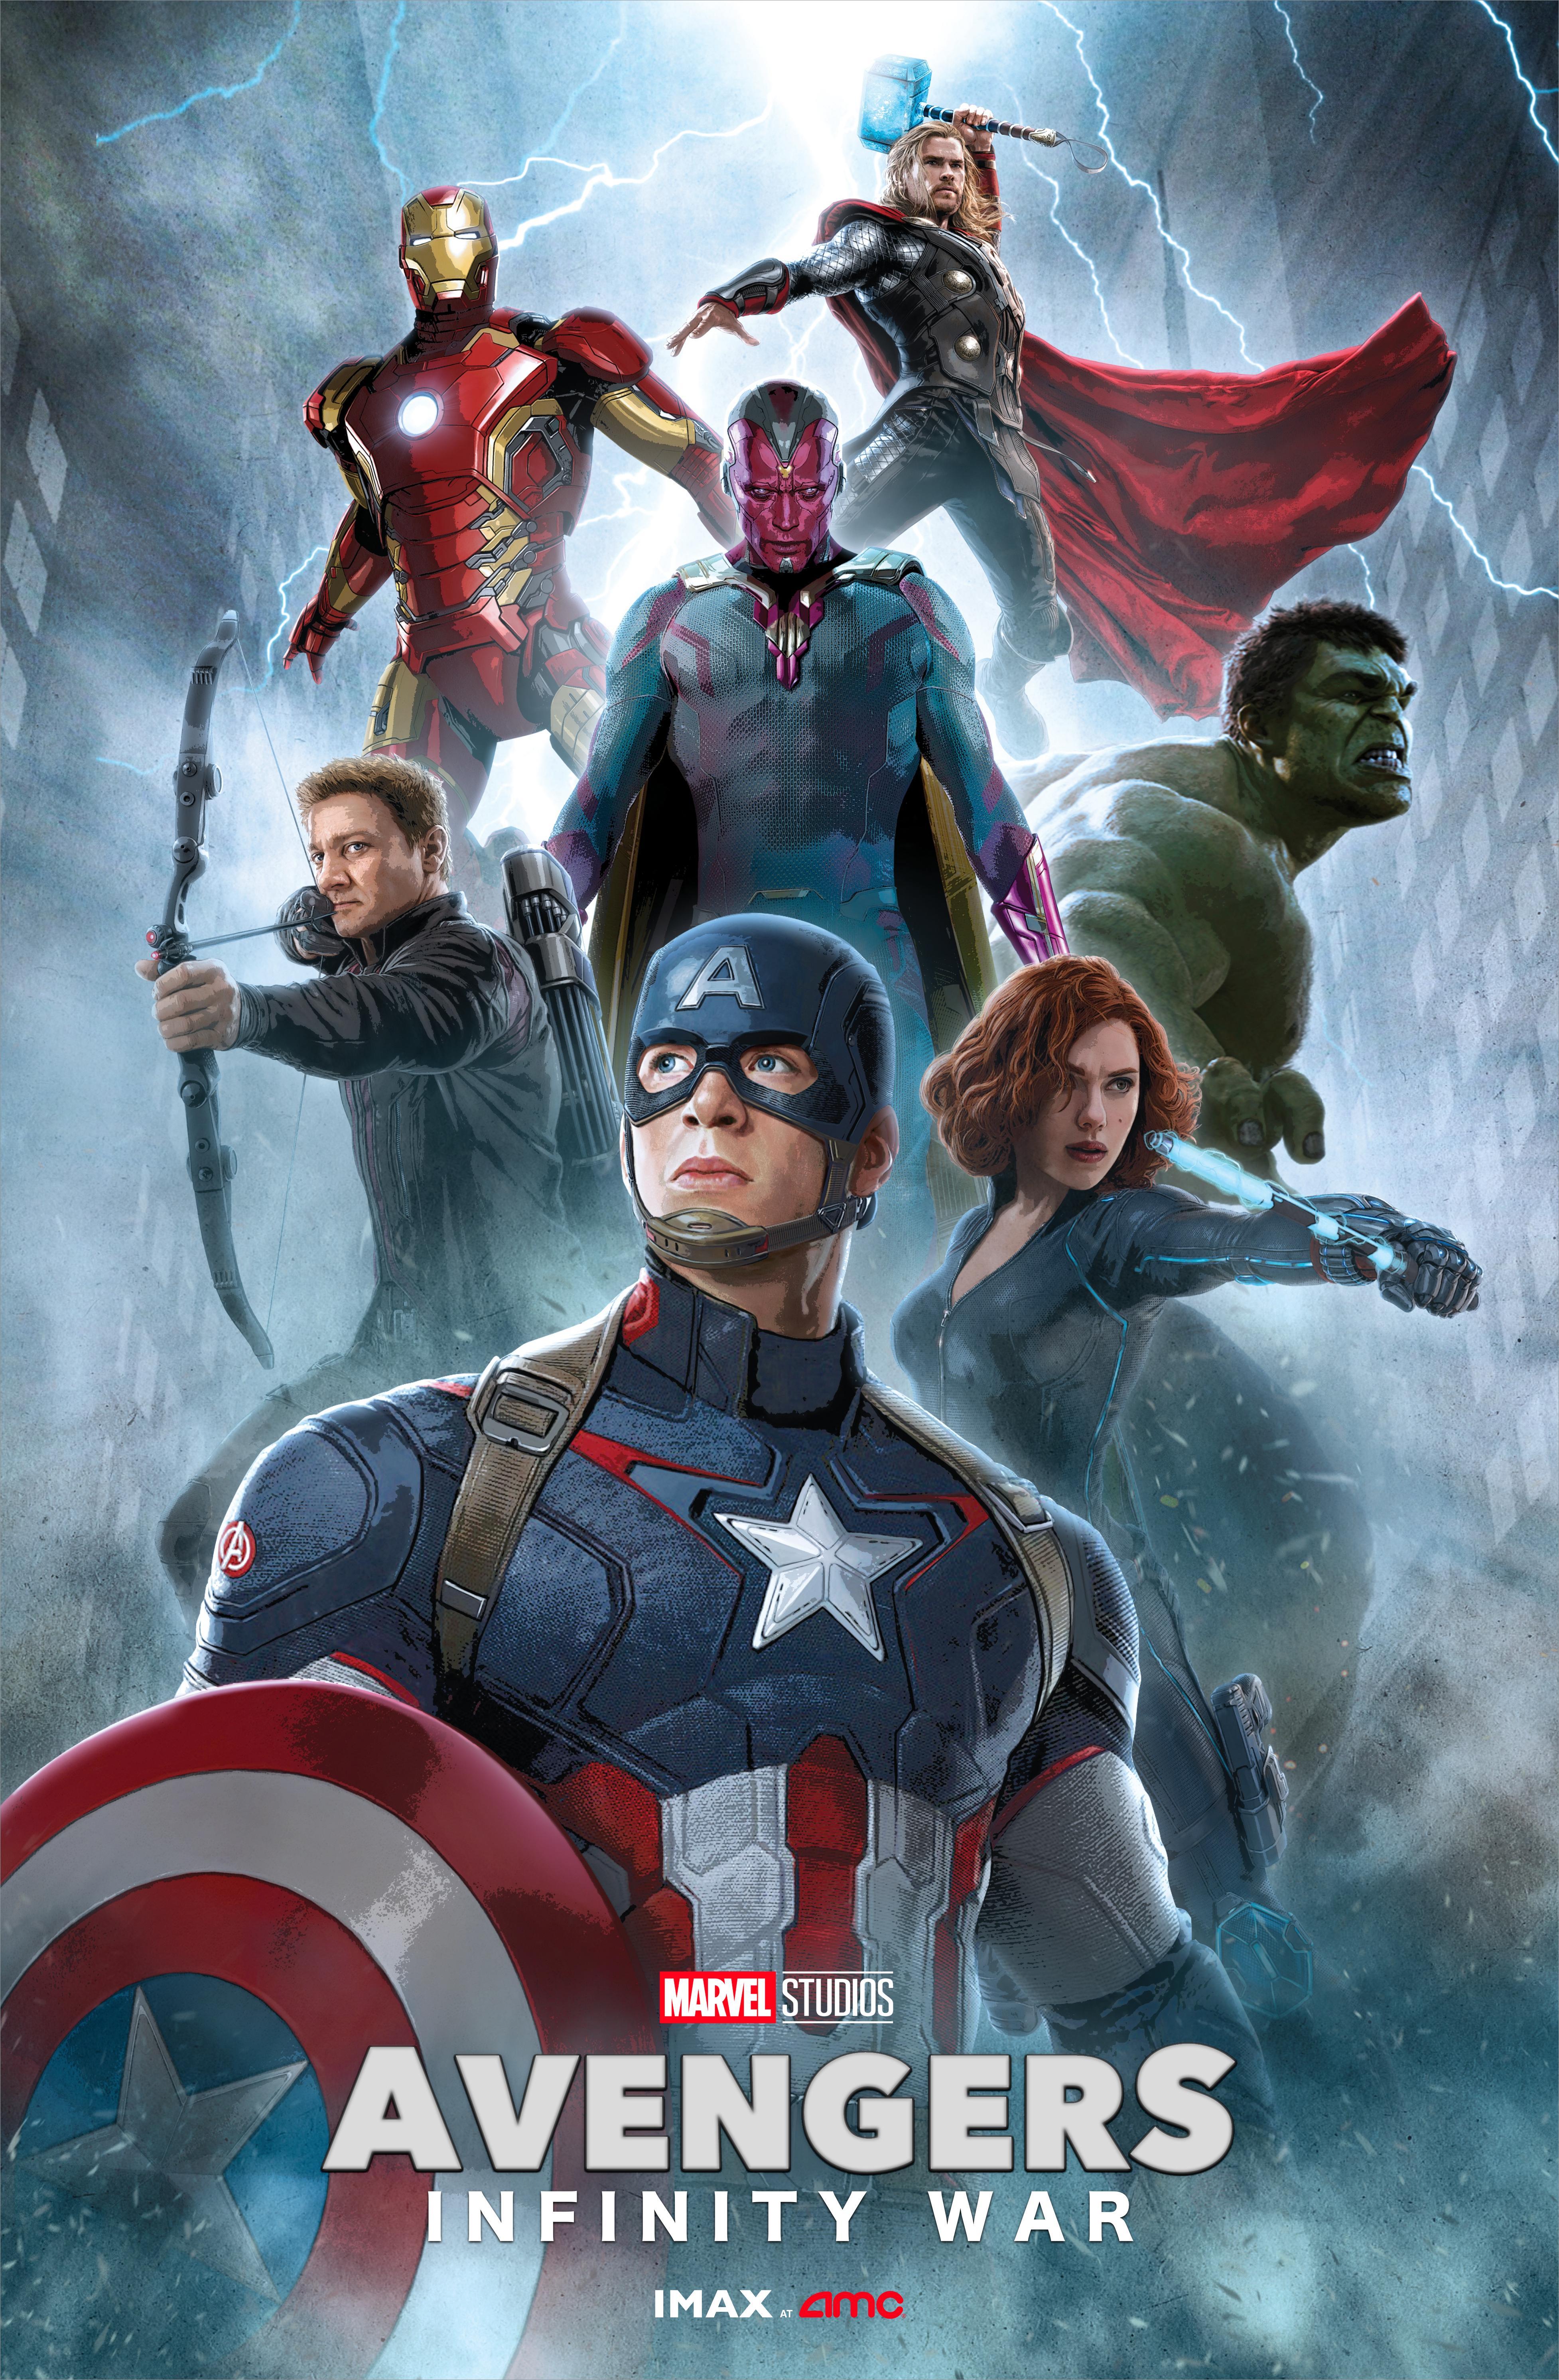 FAN MADE IMAX Avengers: Infinity War POSTER